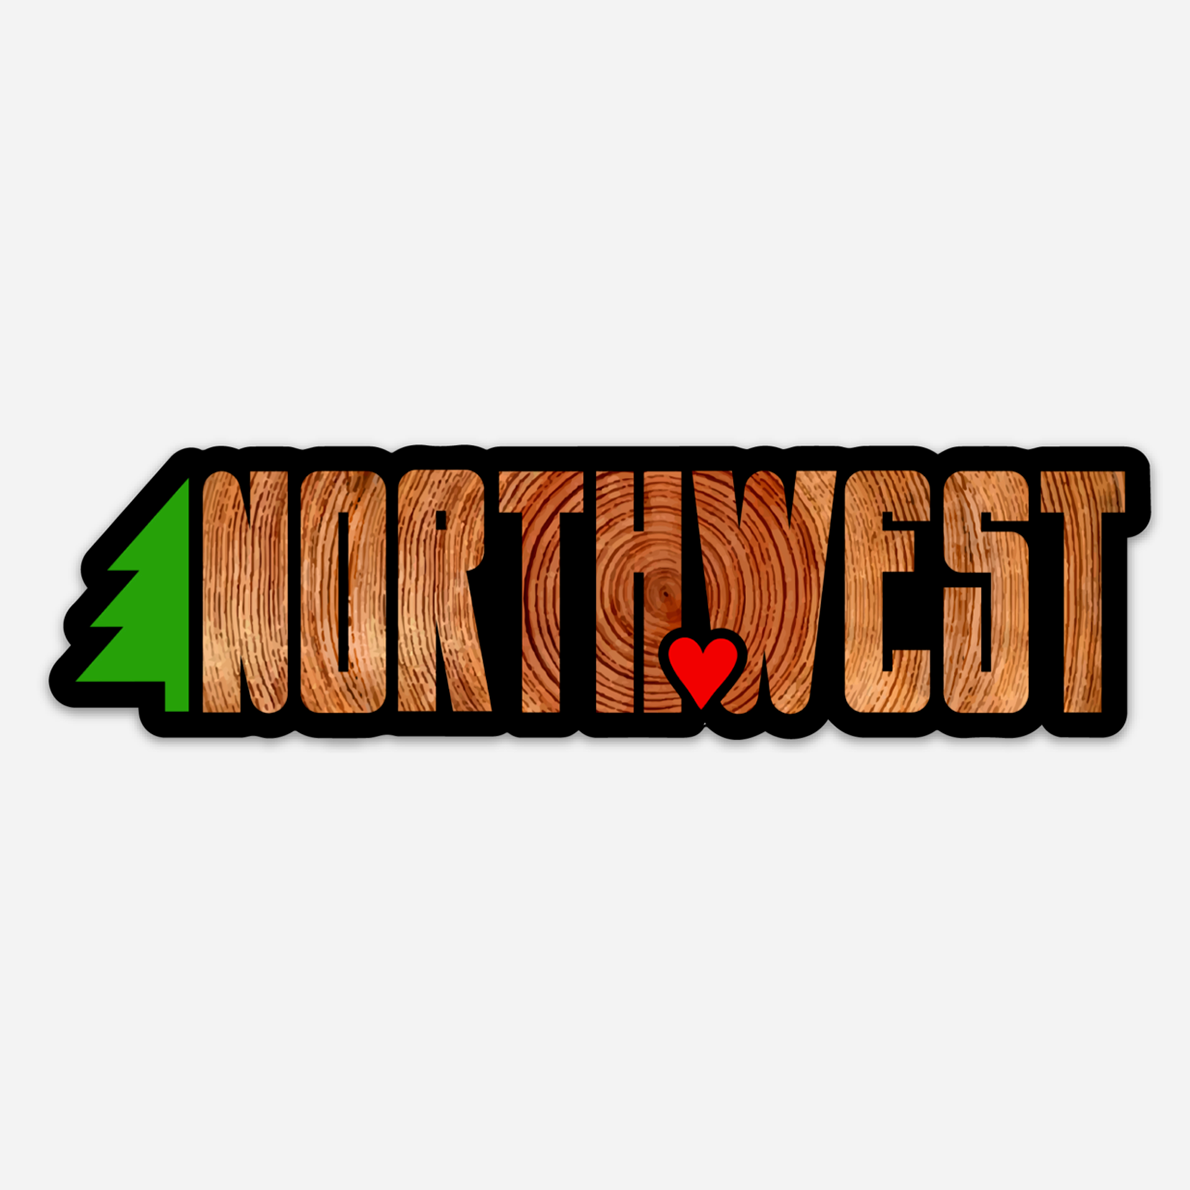 Northwest